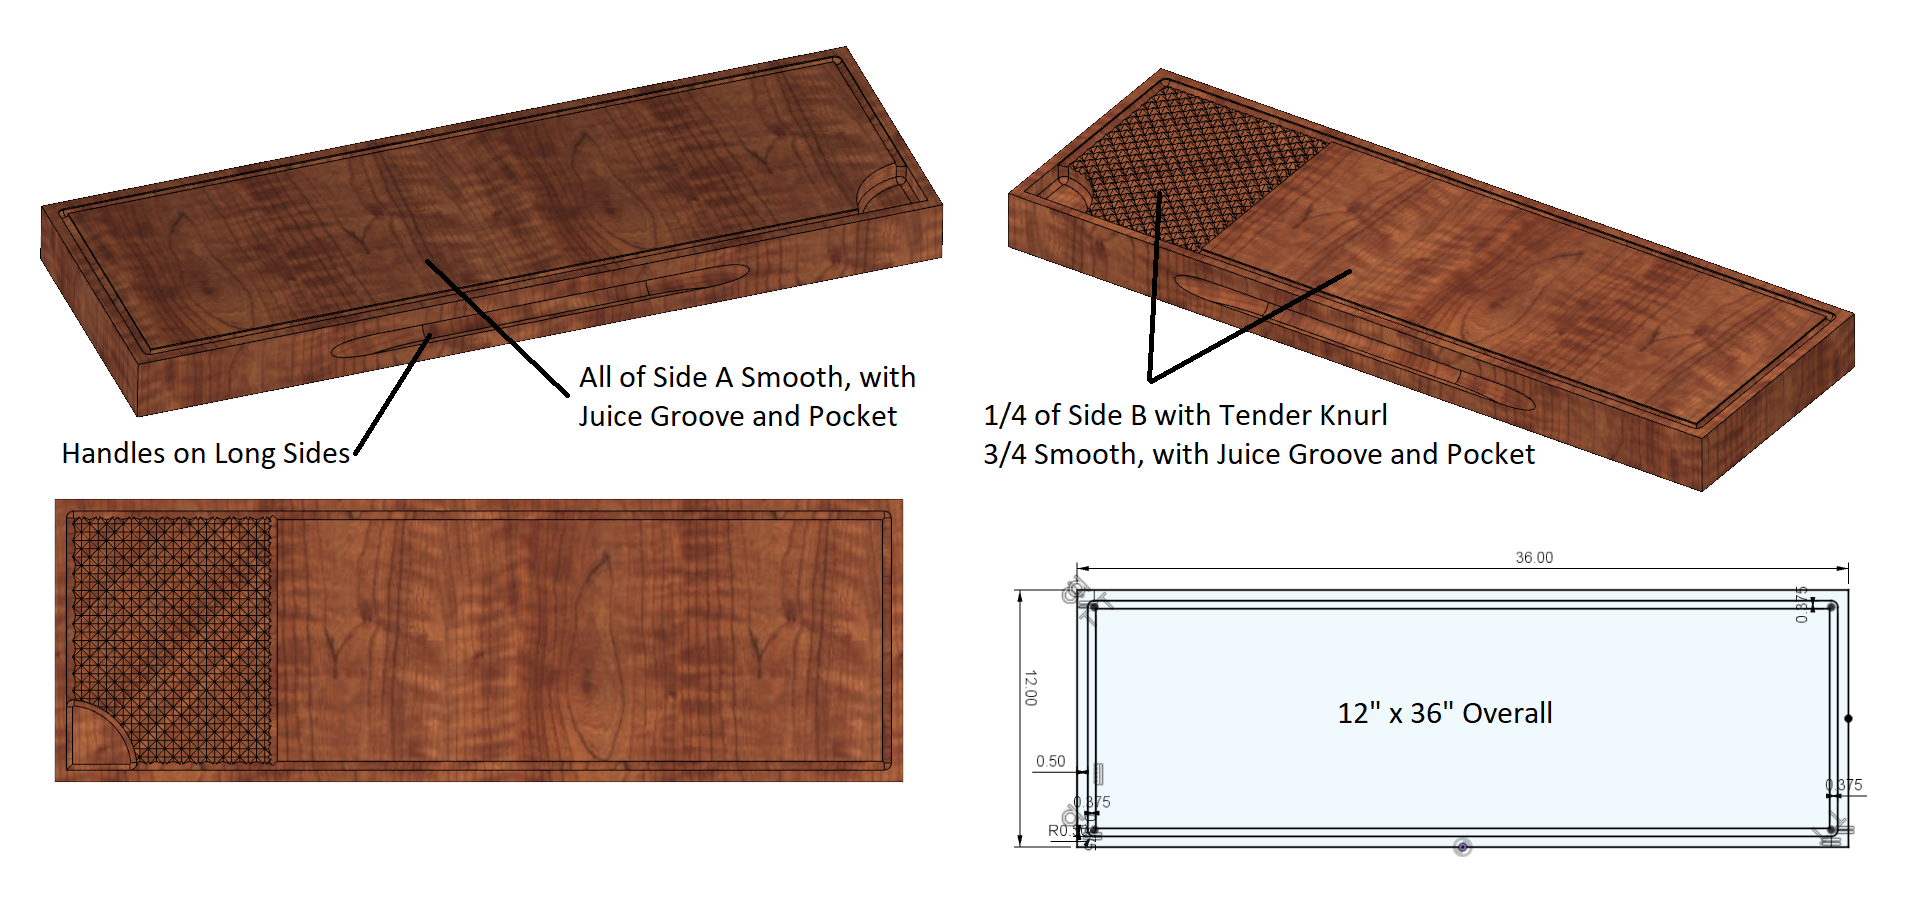 Walnut butcher block cutting board: Large